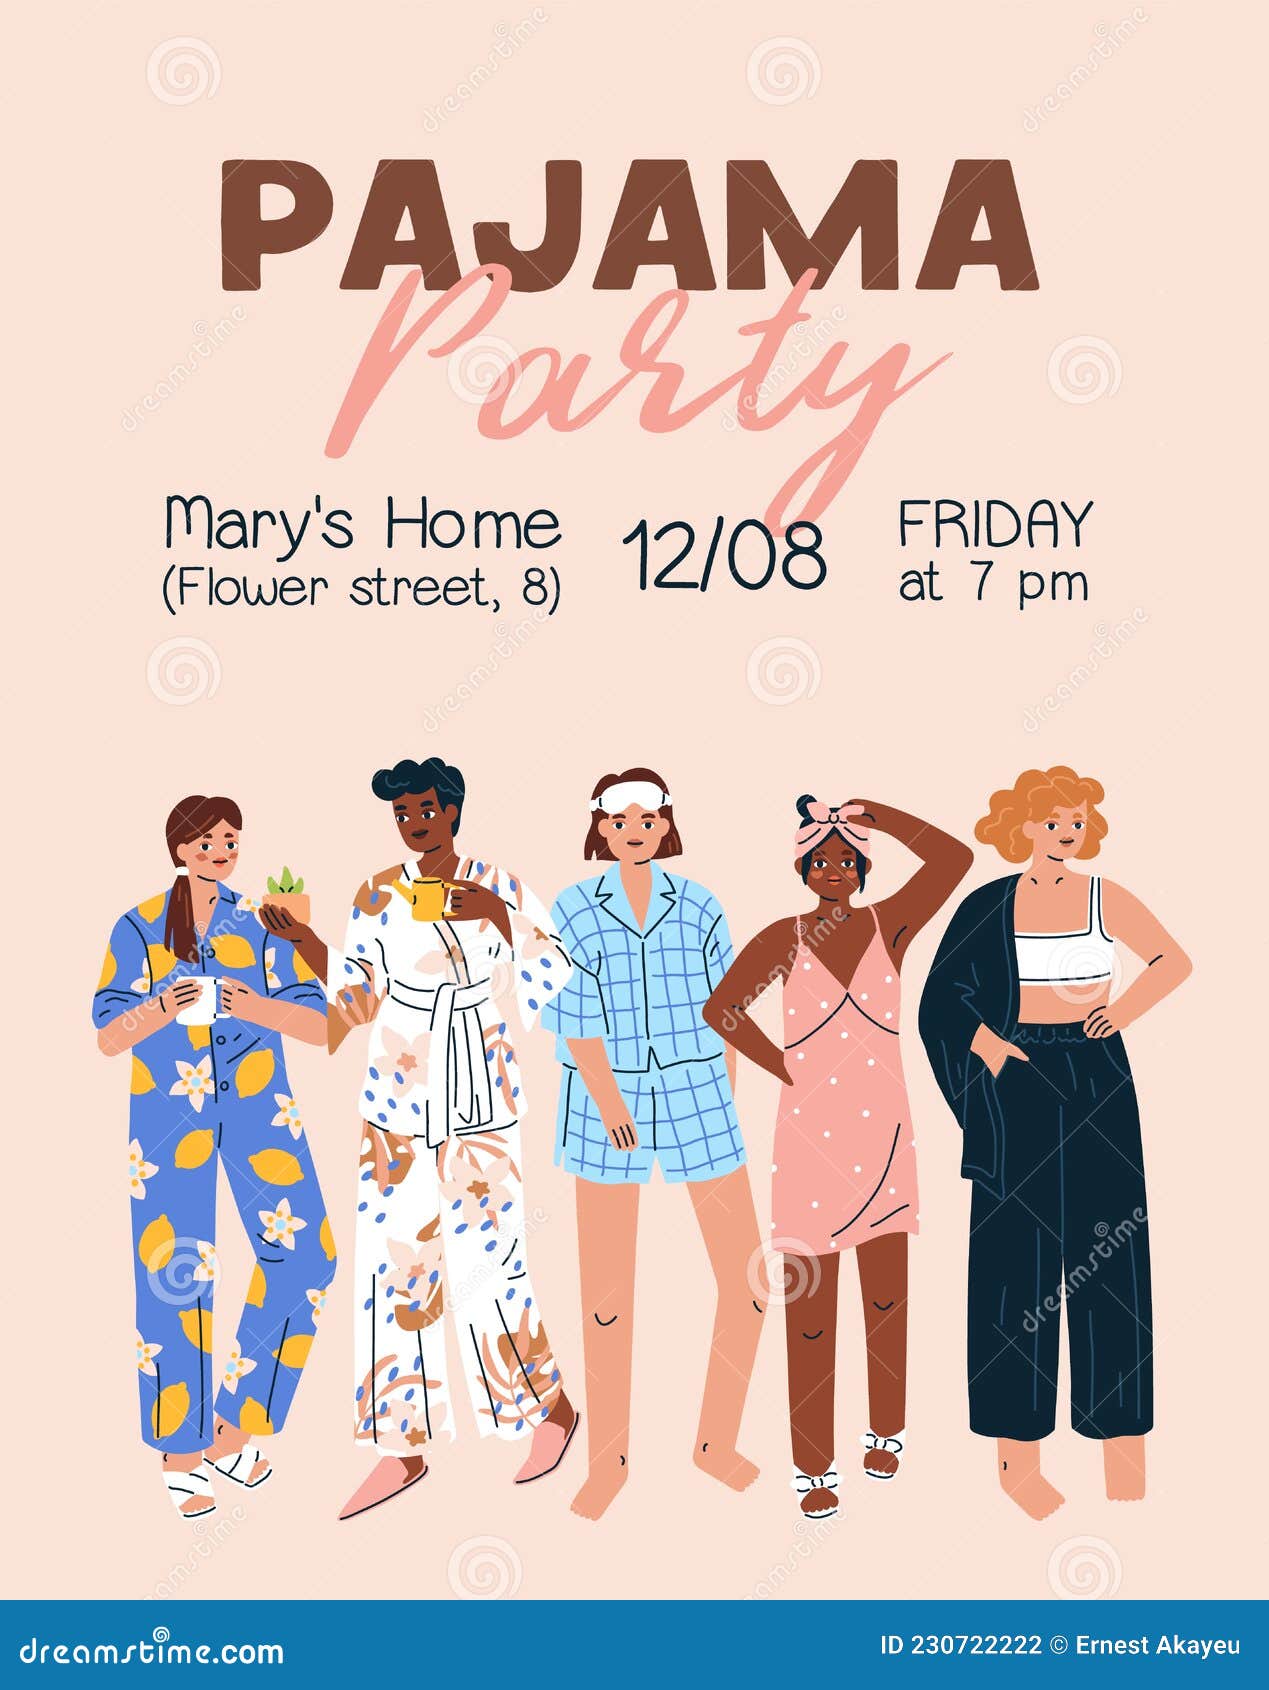 pajama-party-invitation-on-flyer-poster-design-inviting-to-pyjama-home